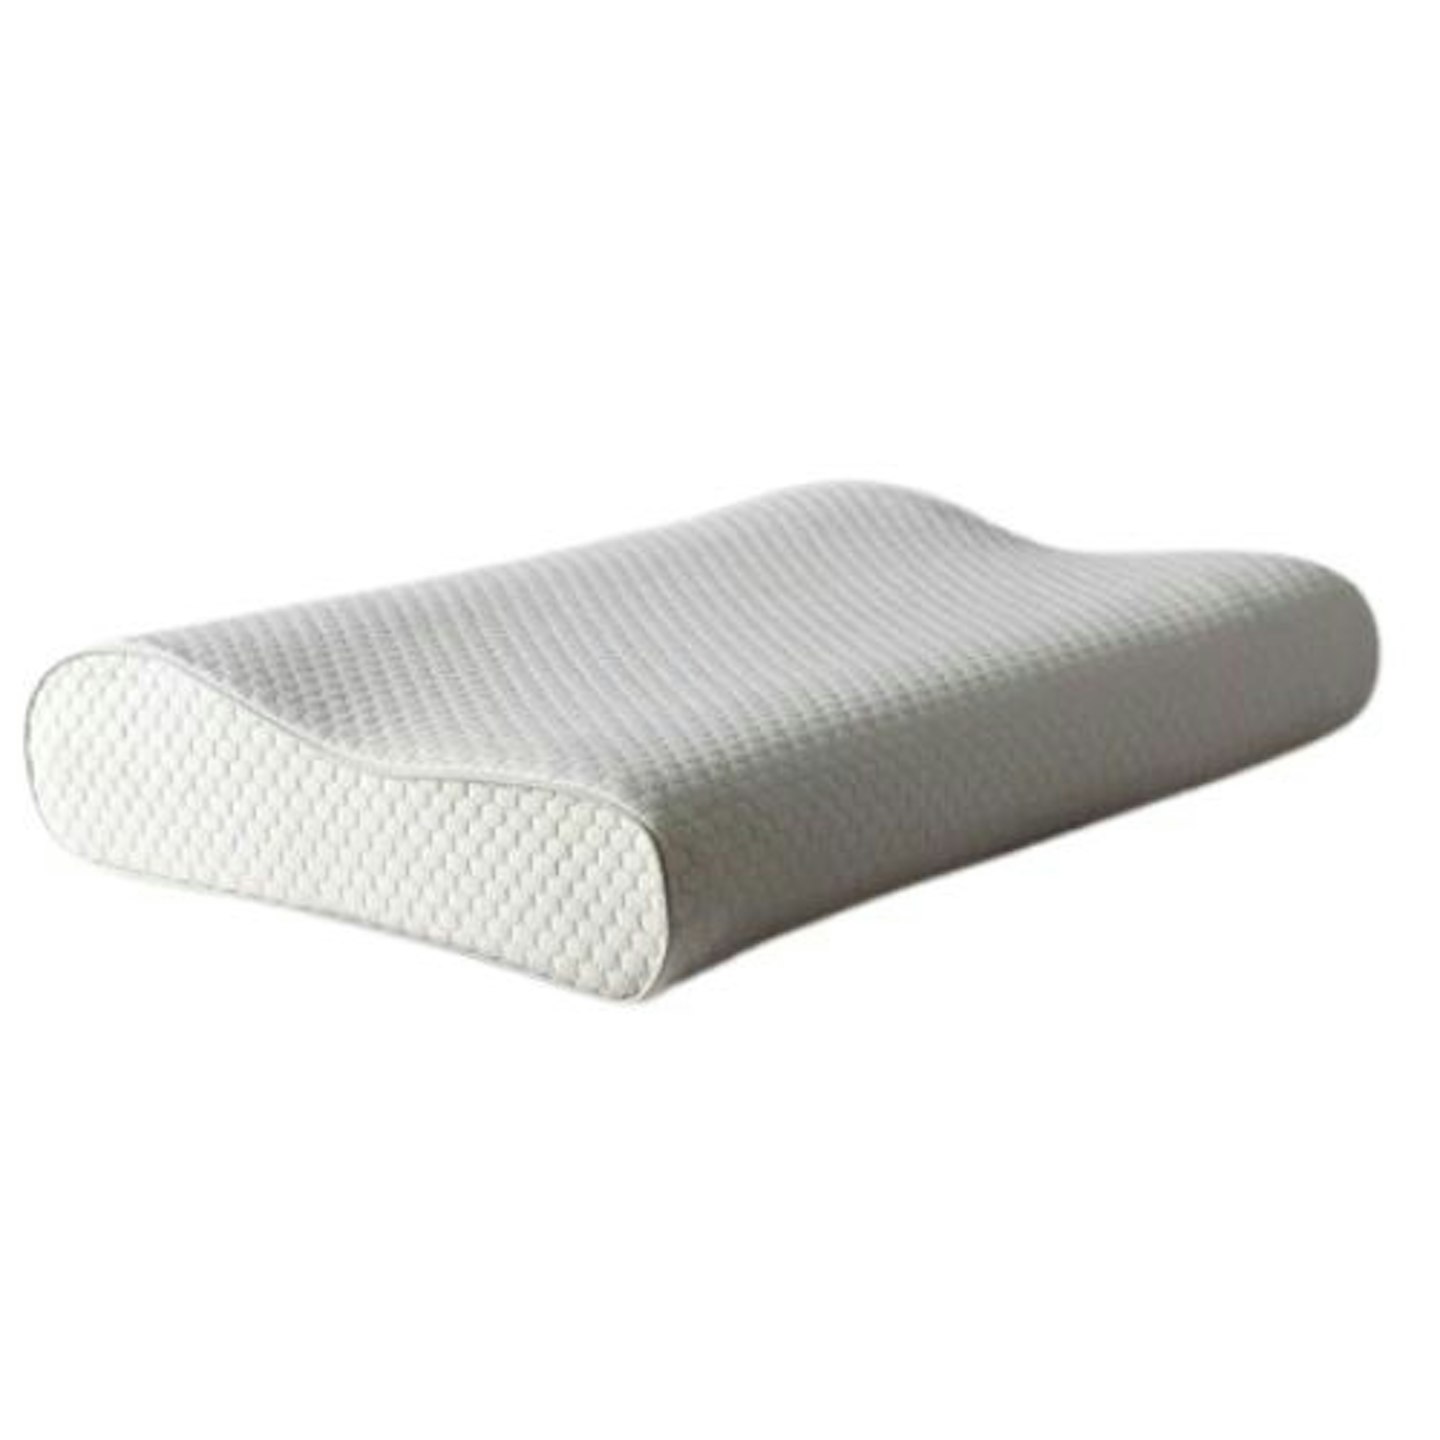 John Lewis Specialist Synthetic 2-Way Memory Foam Pillow